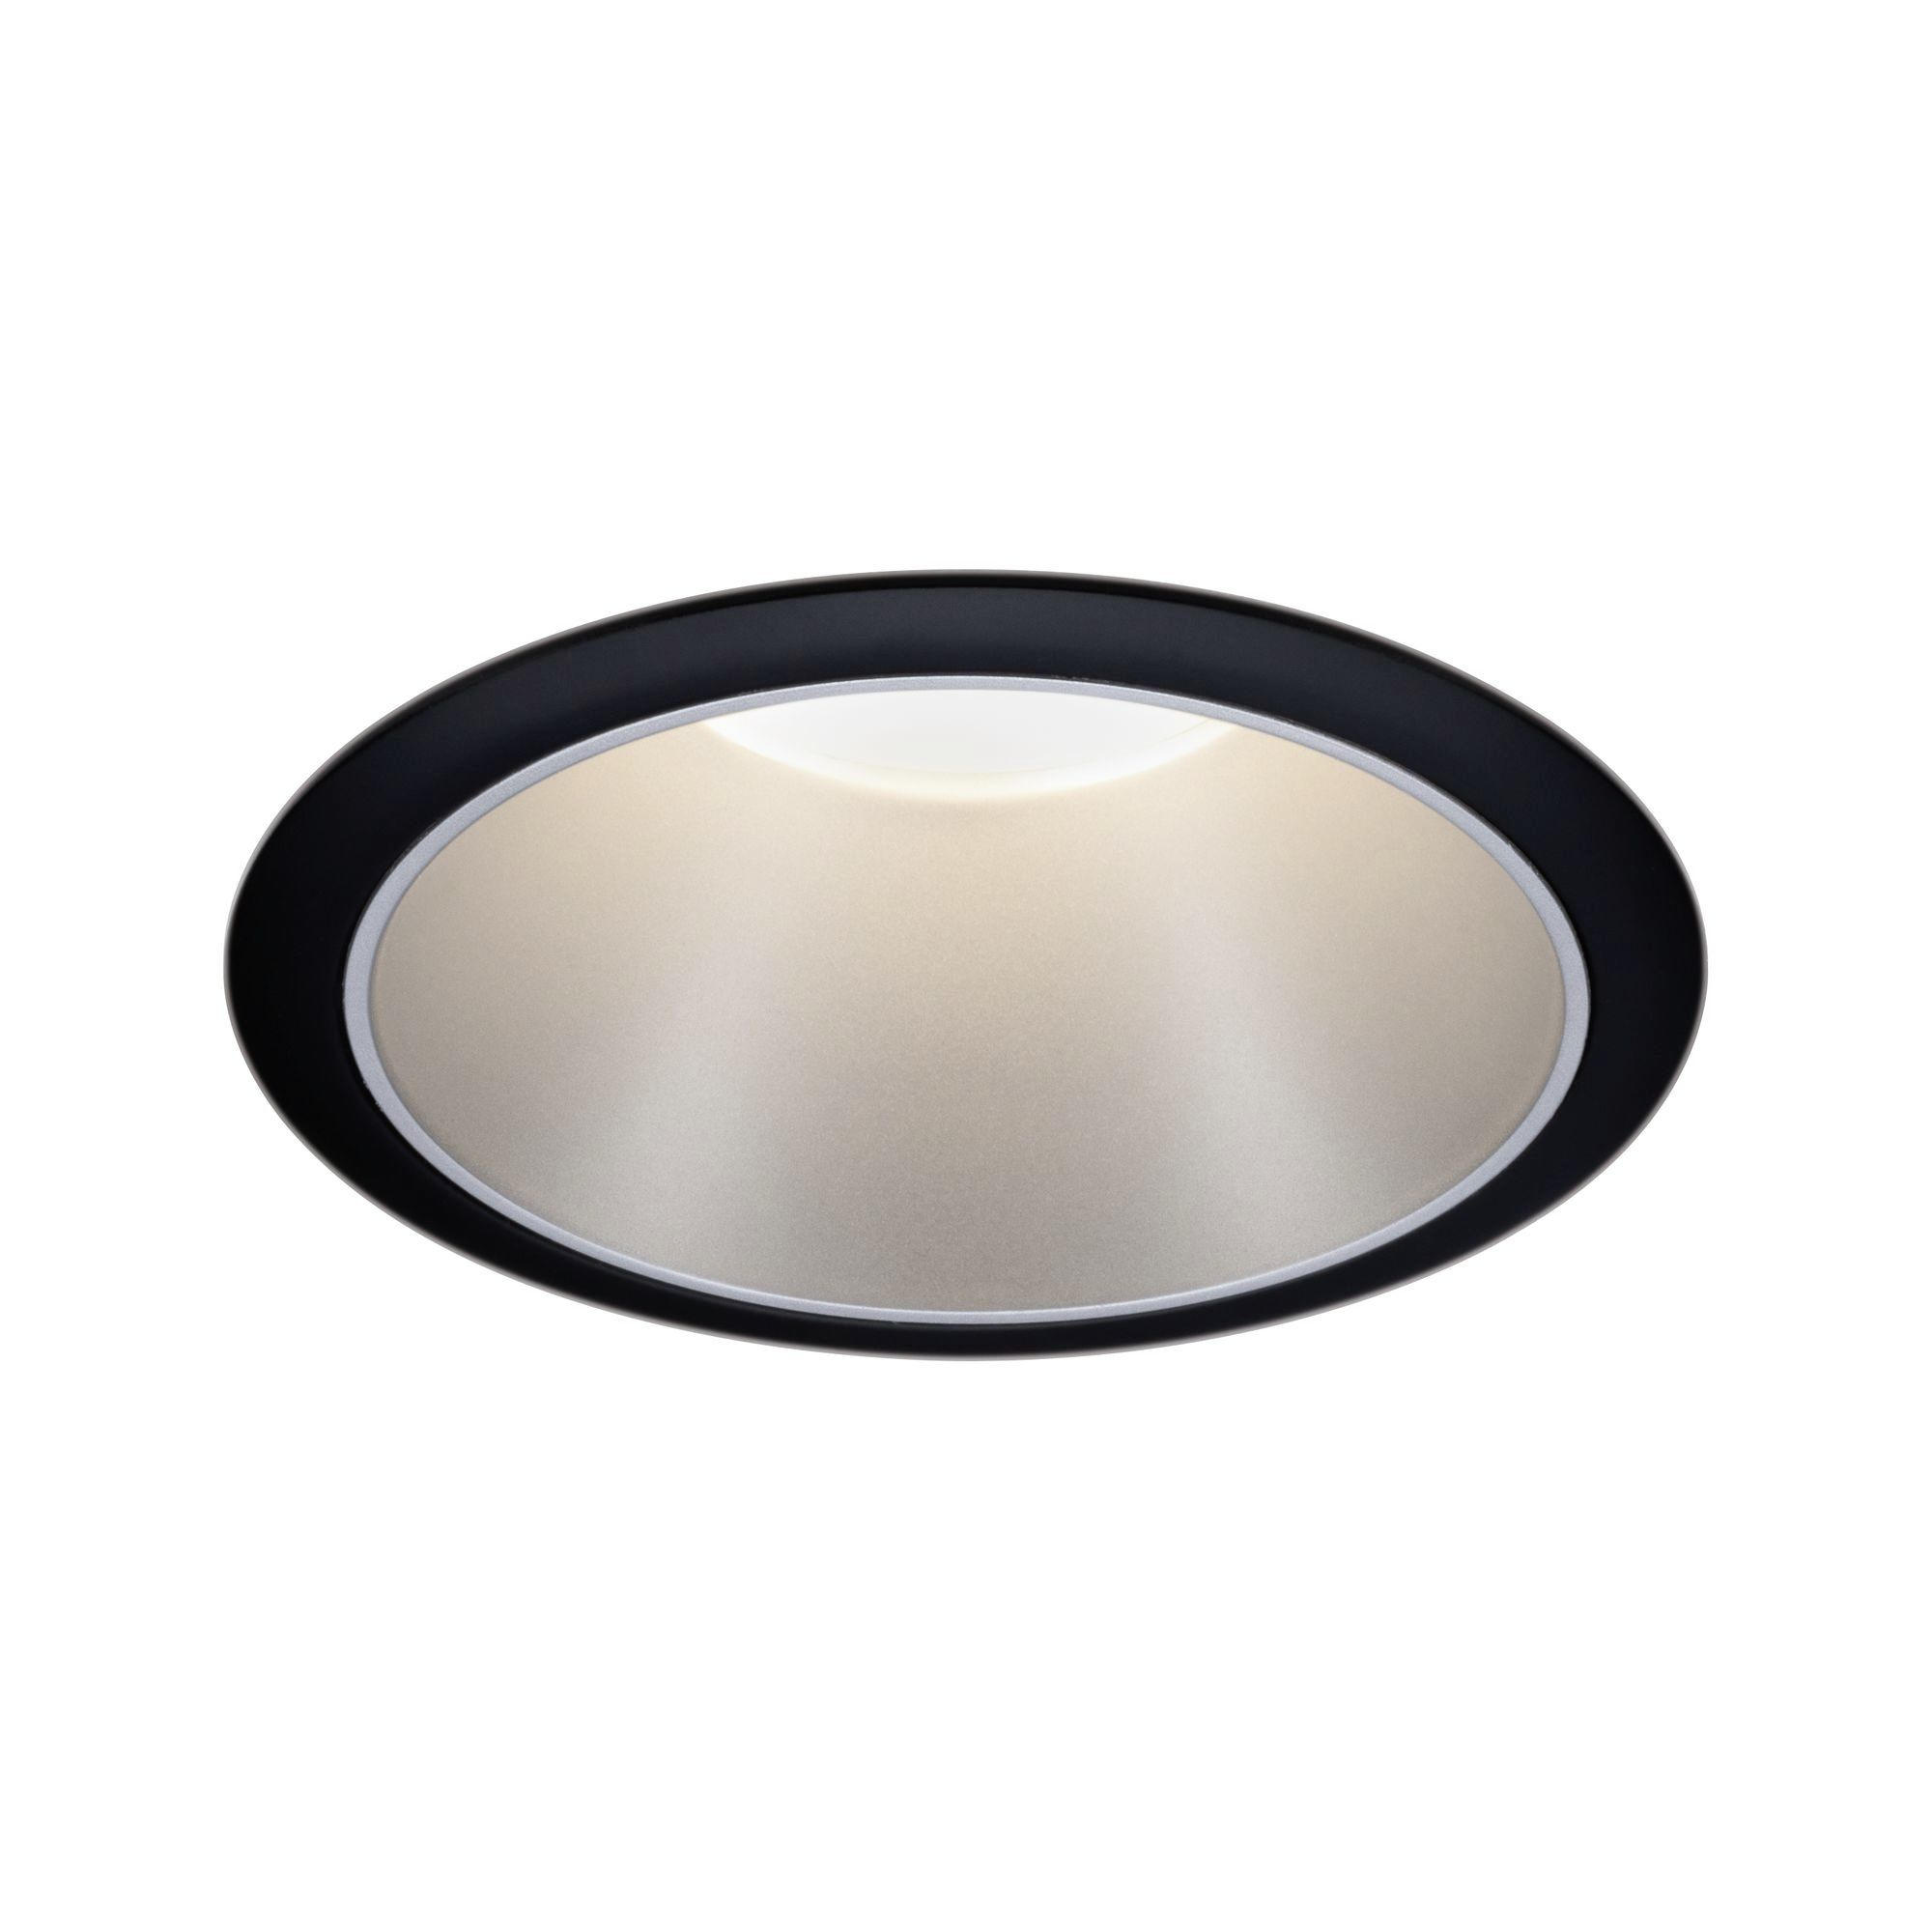 LED-SPOT Cole  - Silberfarben/Schwarz, Design, Kunststoff/Metall (8,8cm) - Paulmann